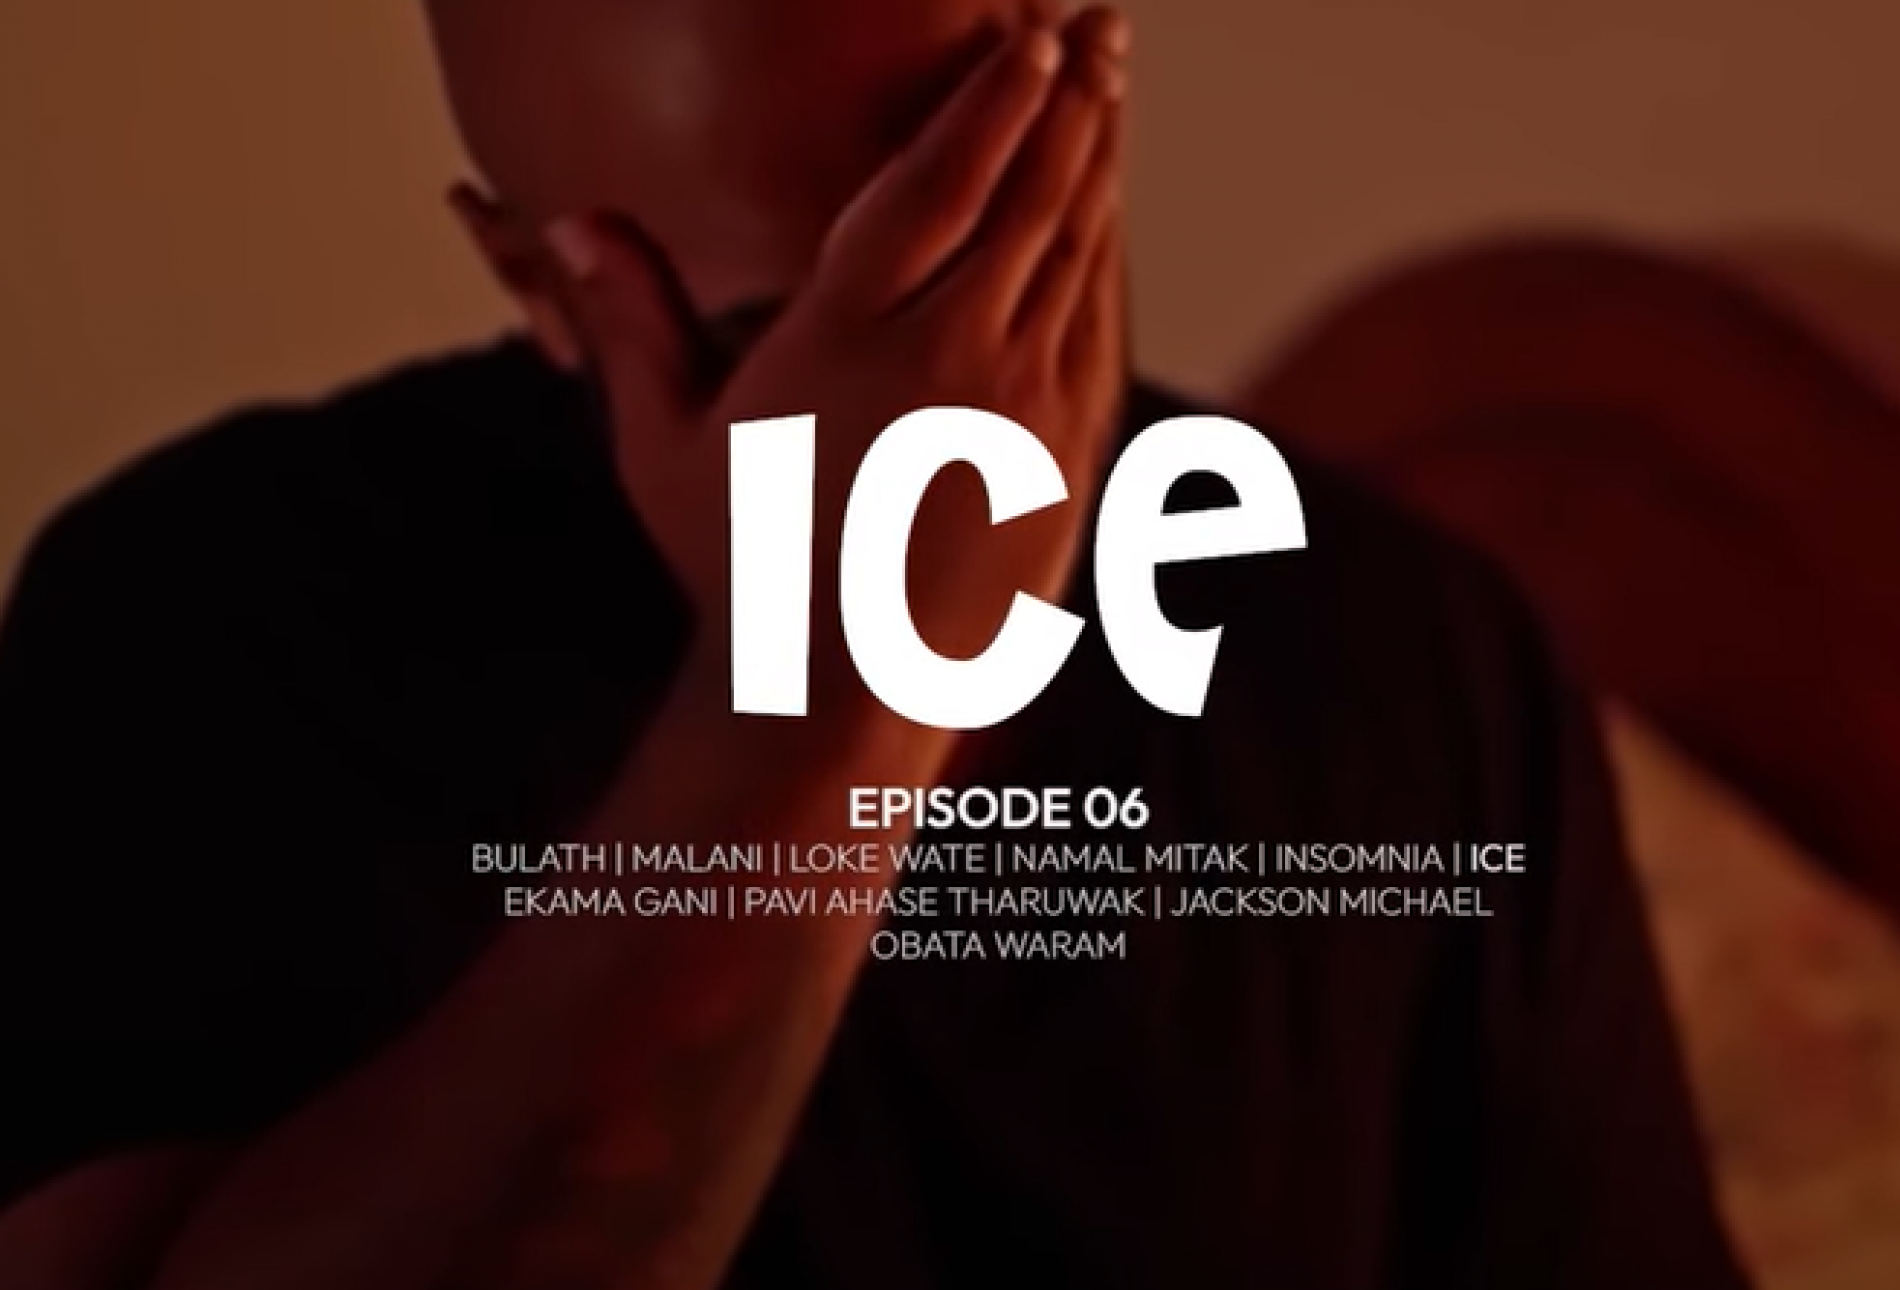 New Music : Costa x DKM – Ice (අයිස්) – Episode 06